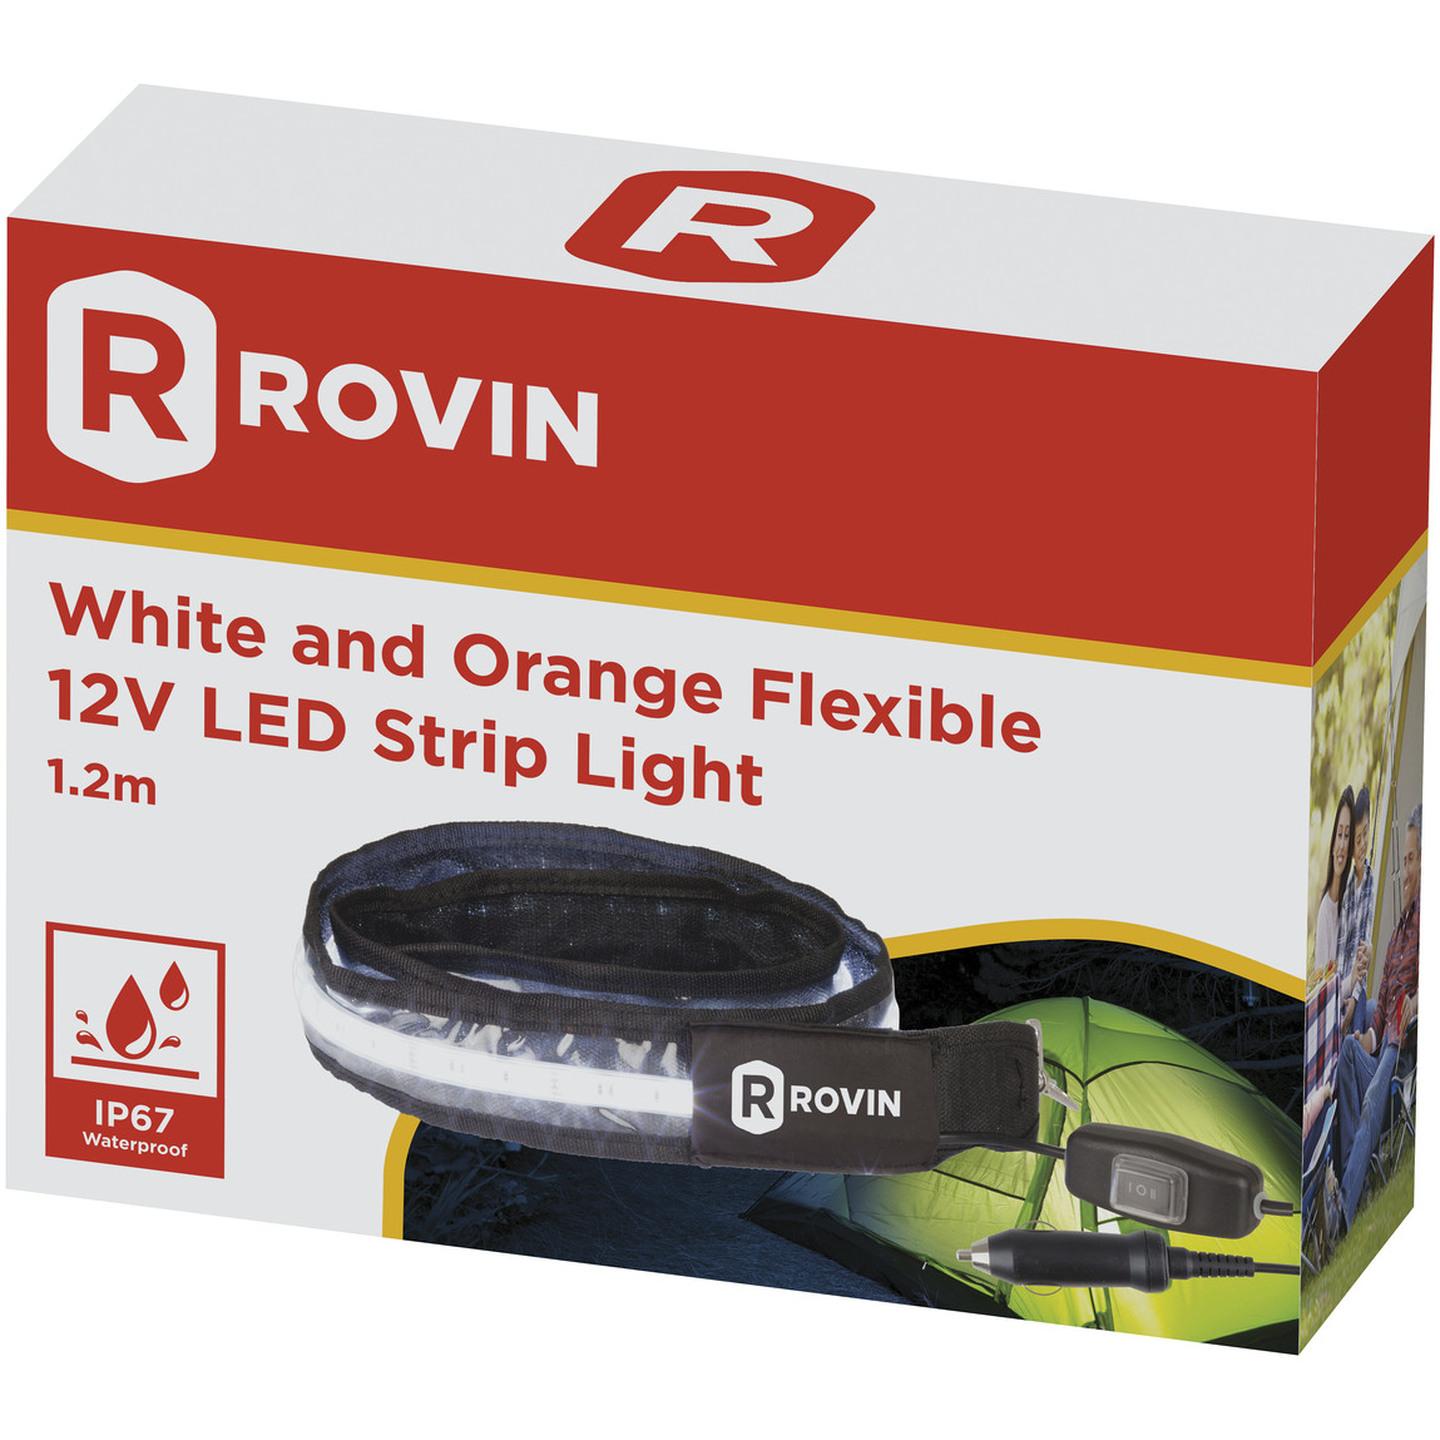 Rovin 1.2m Waterproof IP67 White and Orange Flexible LED Strip